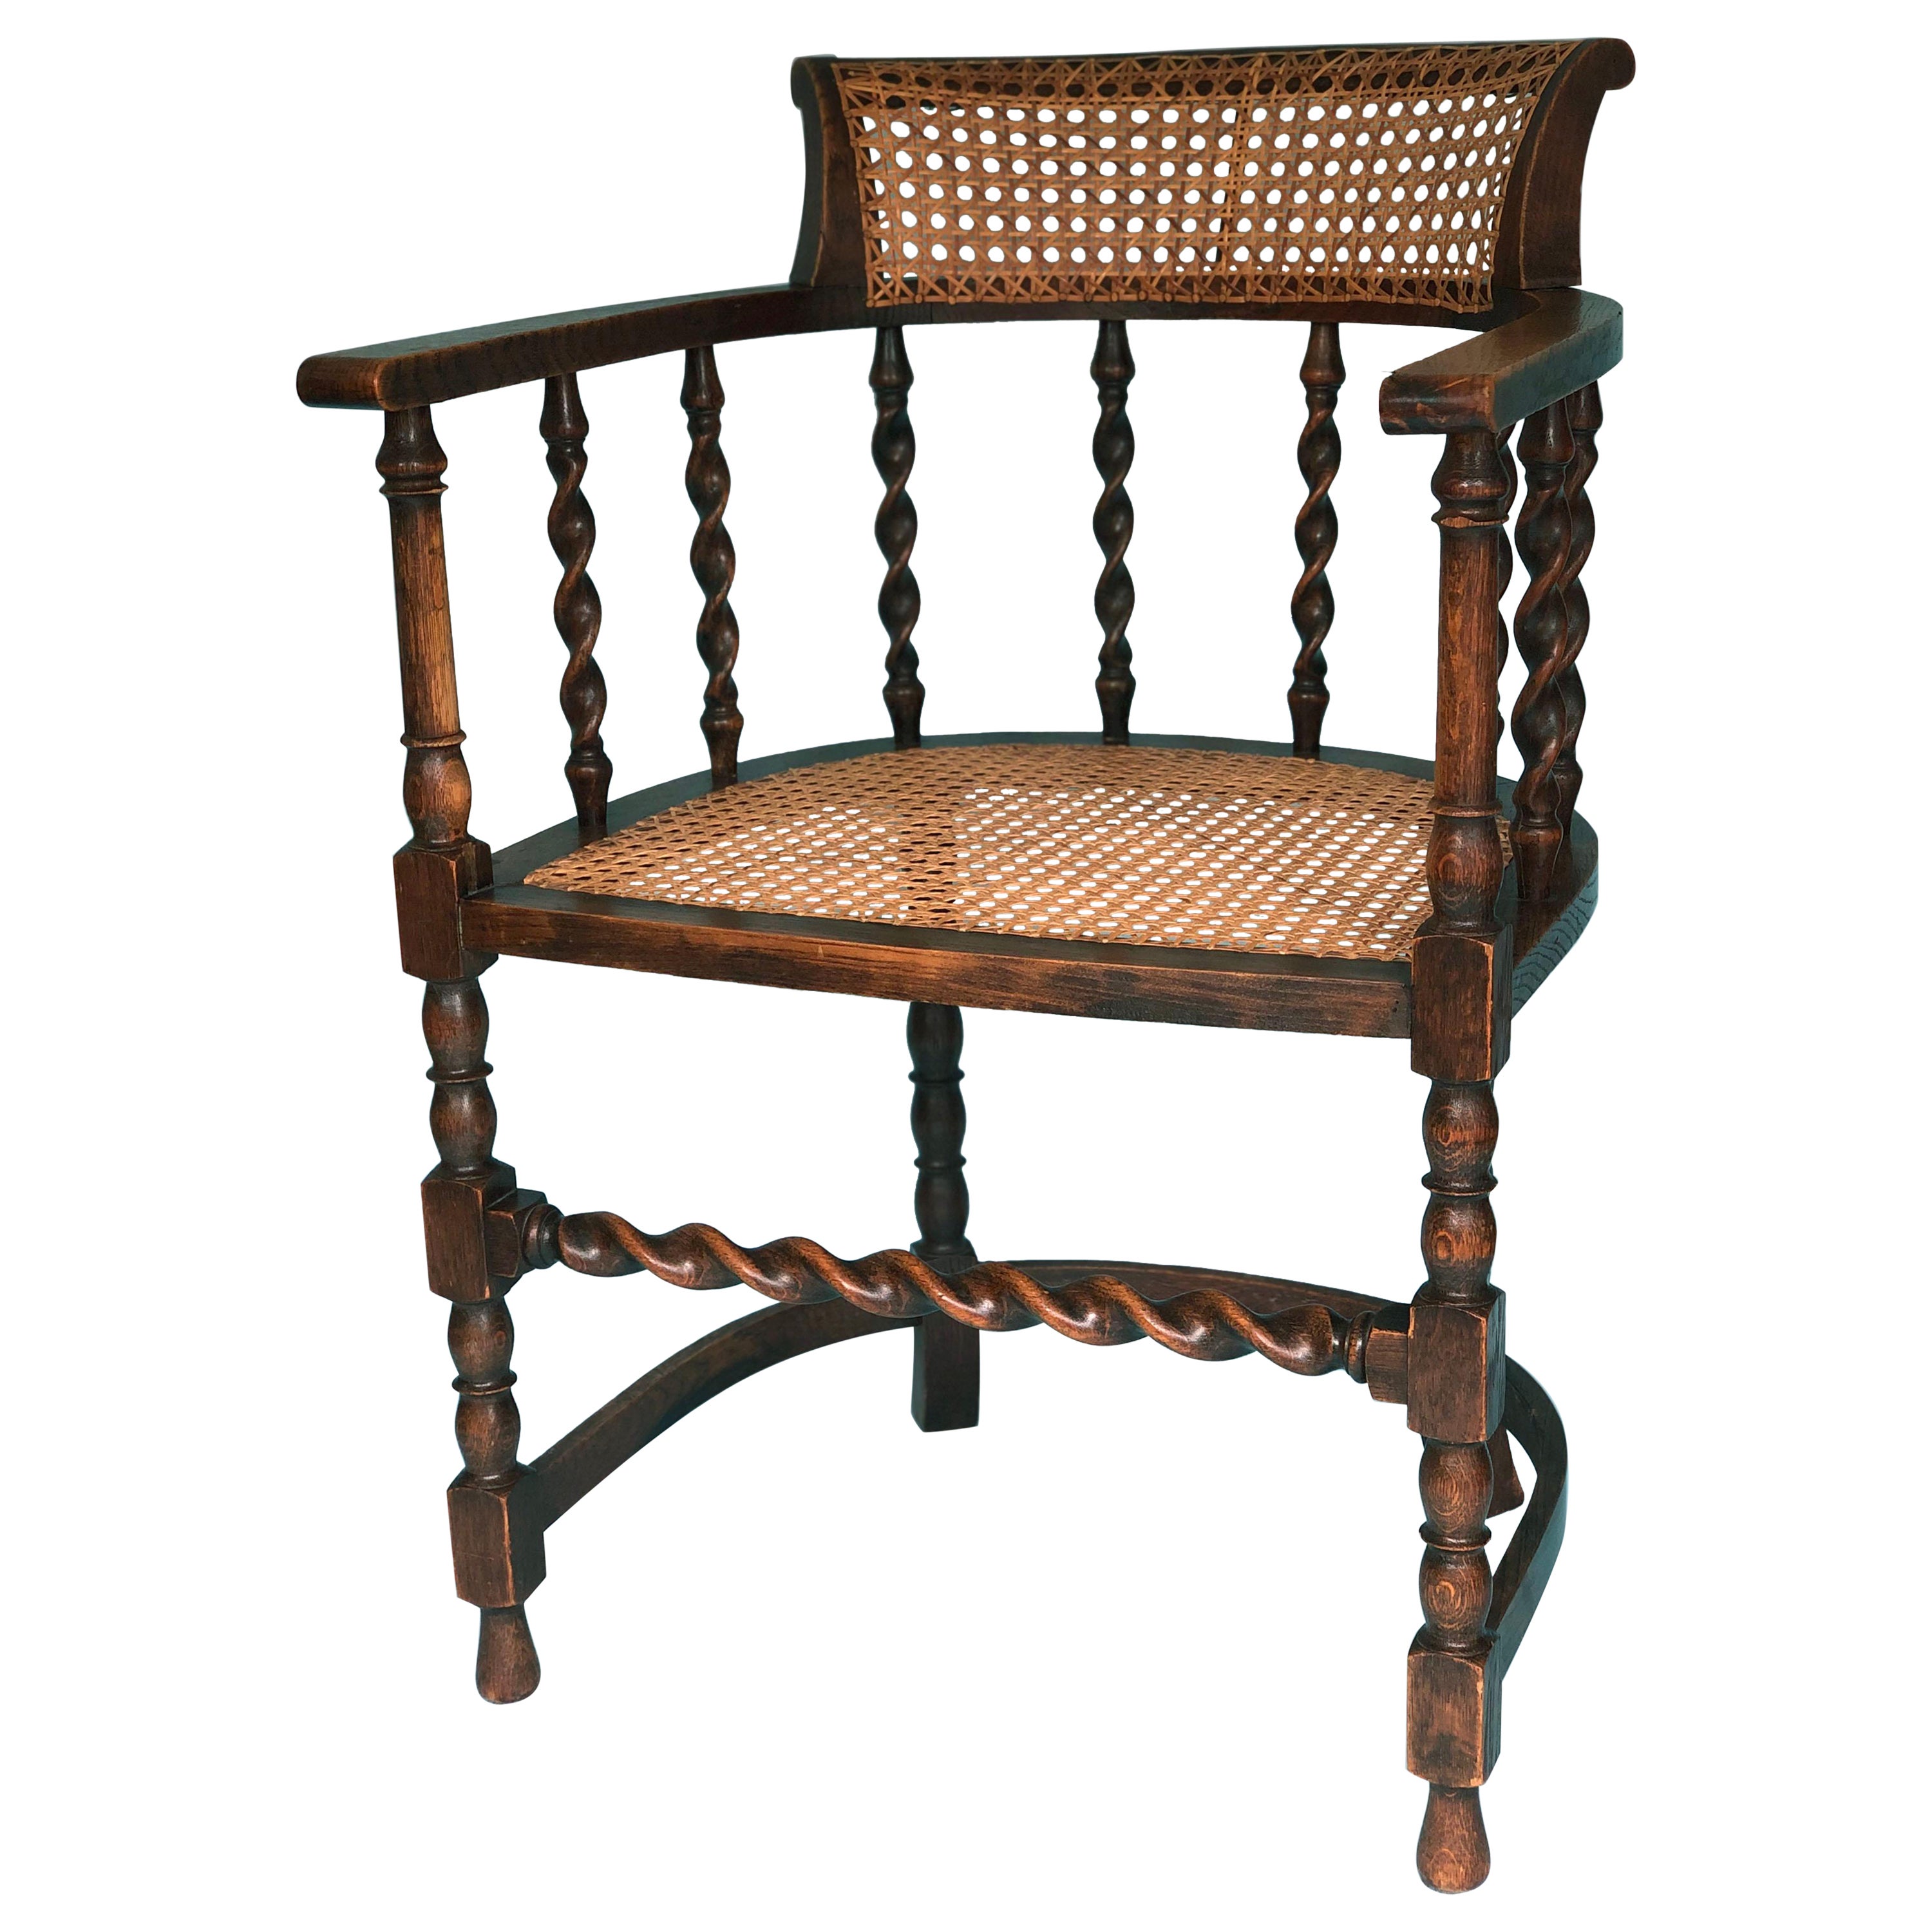 Early 20th Century Edwardian Barley Twist Corner Chair with Cane